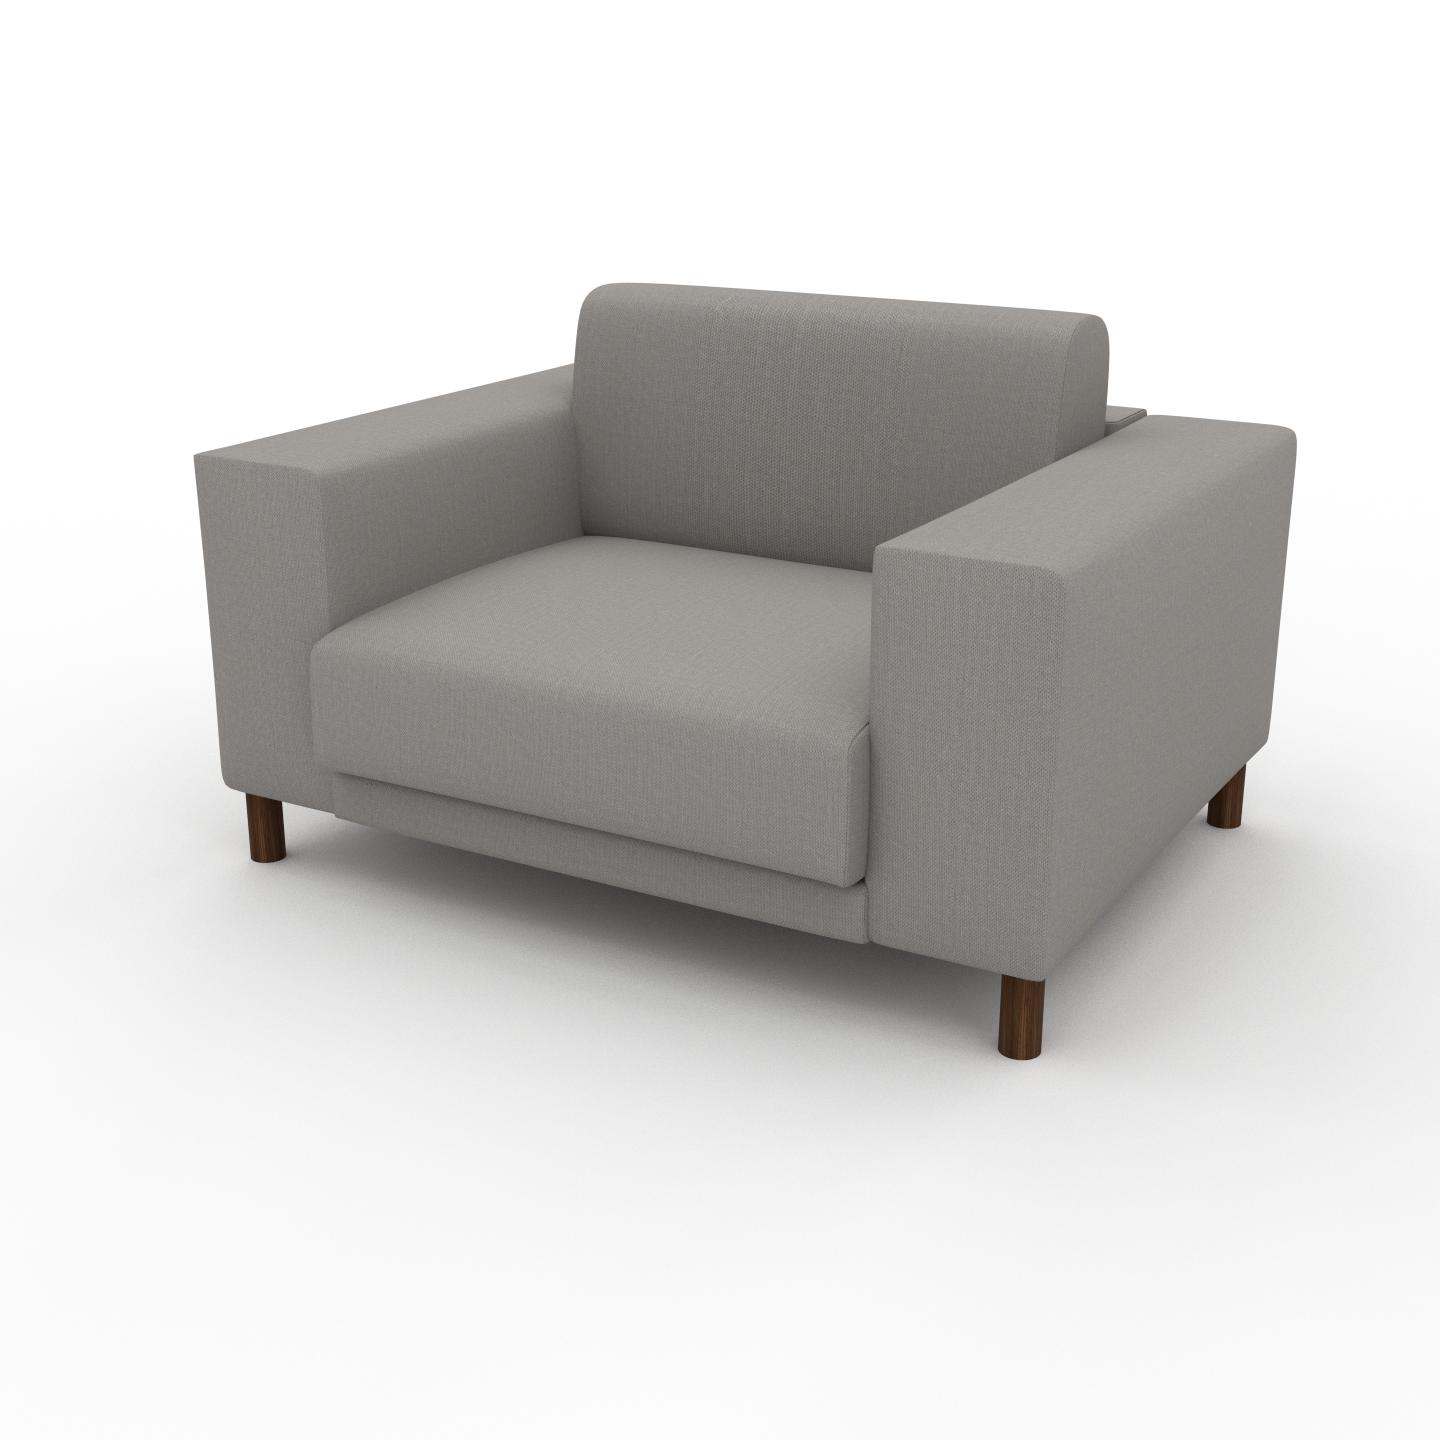 MYCS Sessel Sandgrau - Eleganter Sessel: Hochwertige Qualität, einzigartiges Design - 128 x 75 x 98 cm, Individuell konfigurierbar